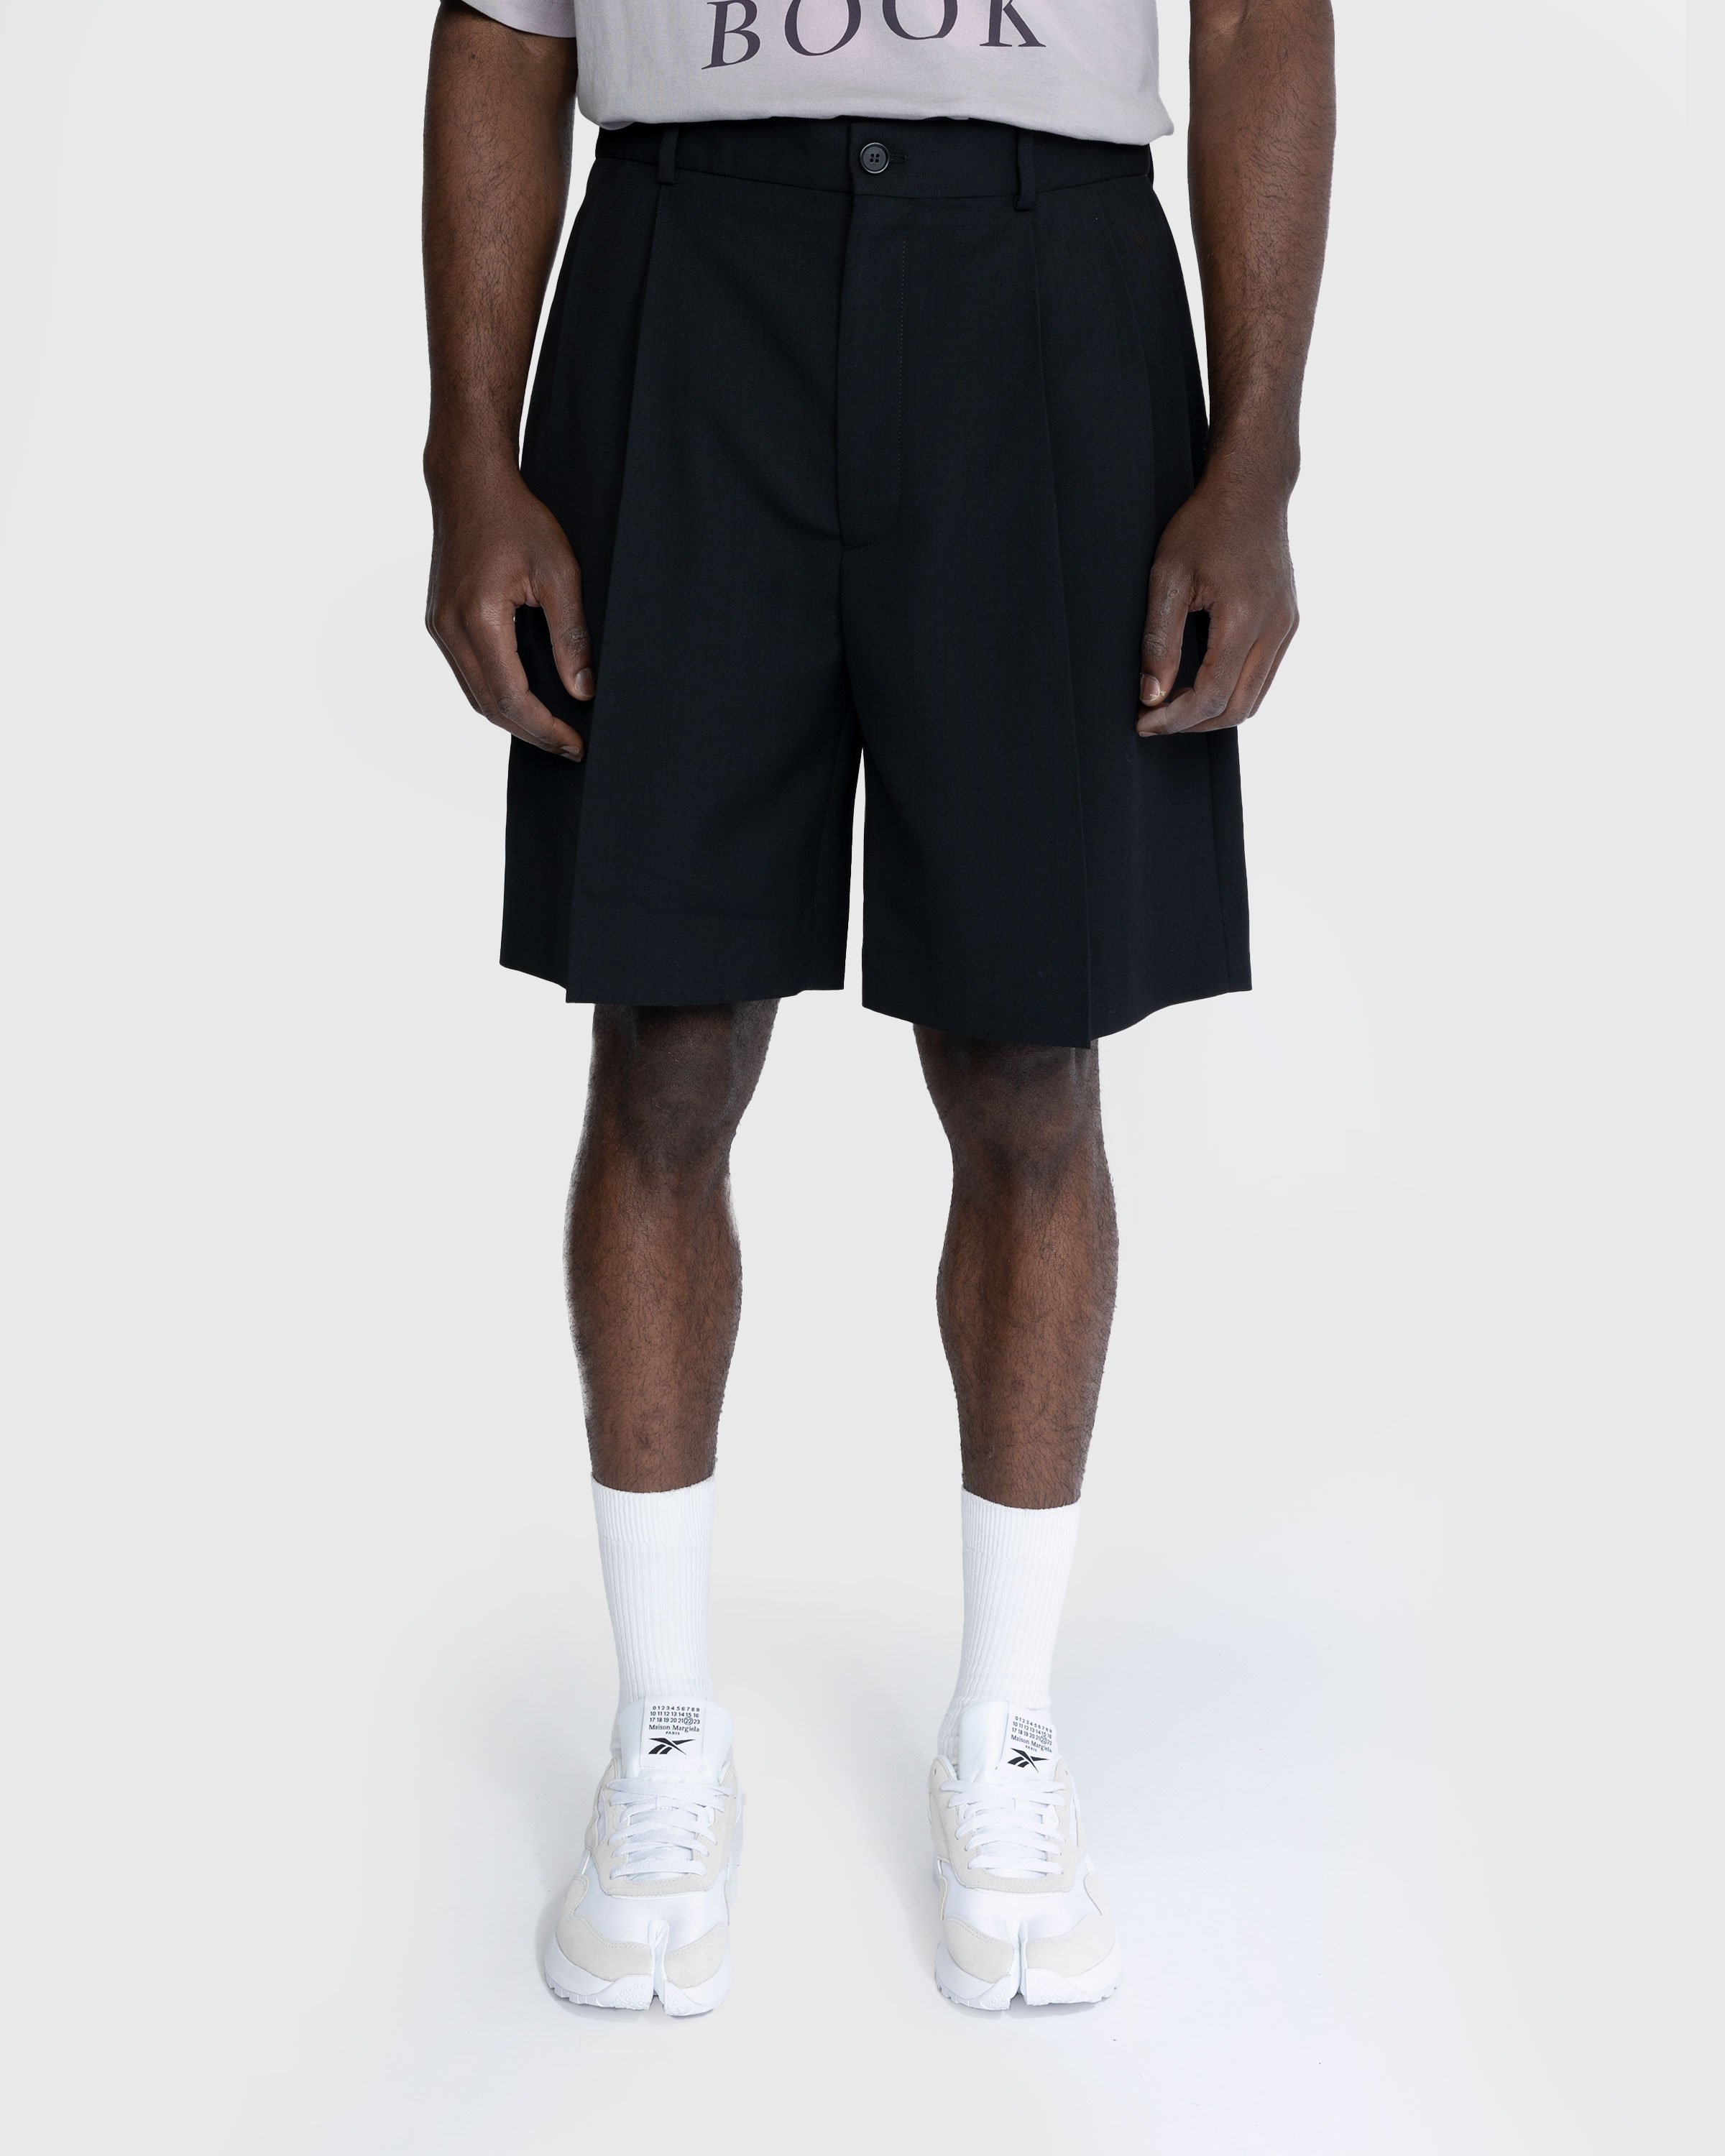 Acne Studios - Tailored Pleated Shorts Black - Clothing - Black - Image 2